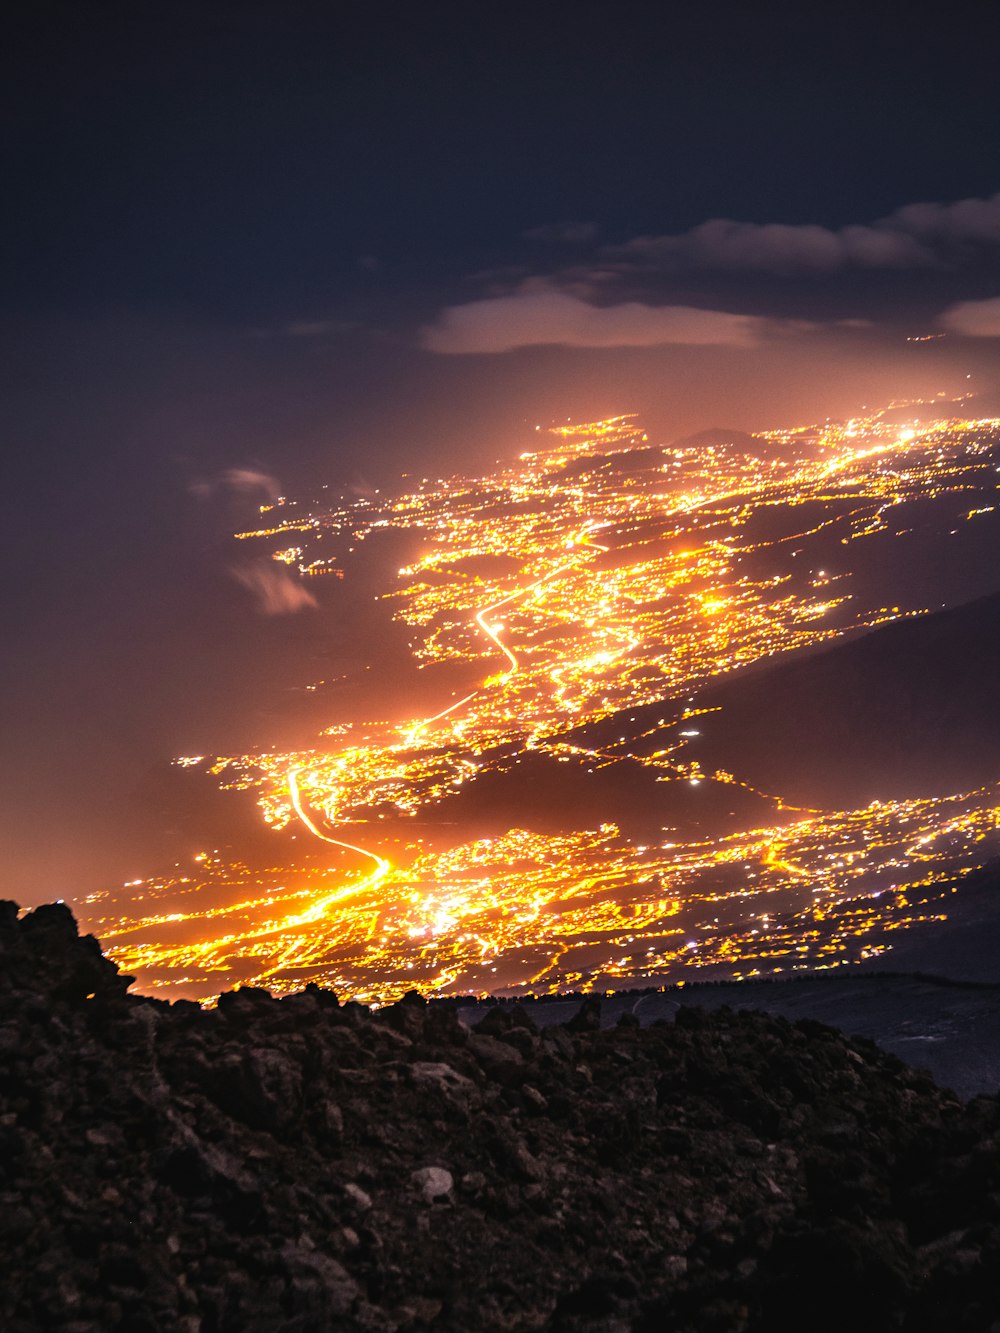 kilometer Melbourne evaluerbare silhouette of mountain during sunset photo – Free Tenerife Image on Unsplash